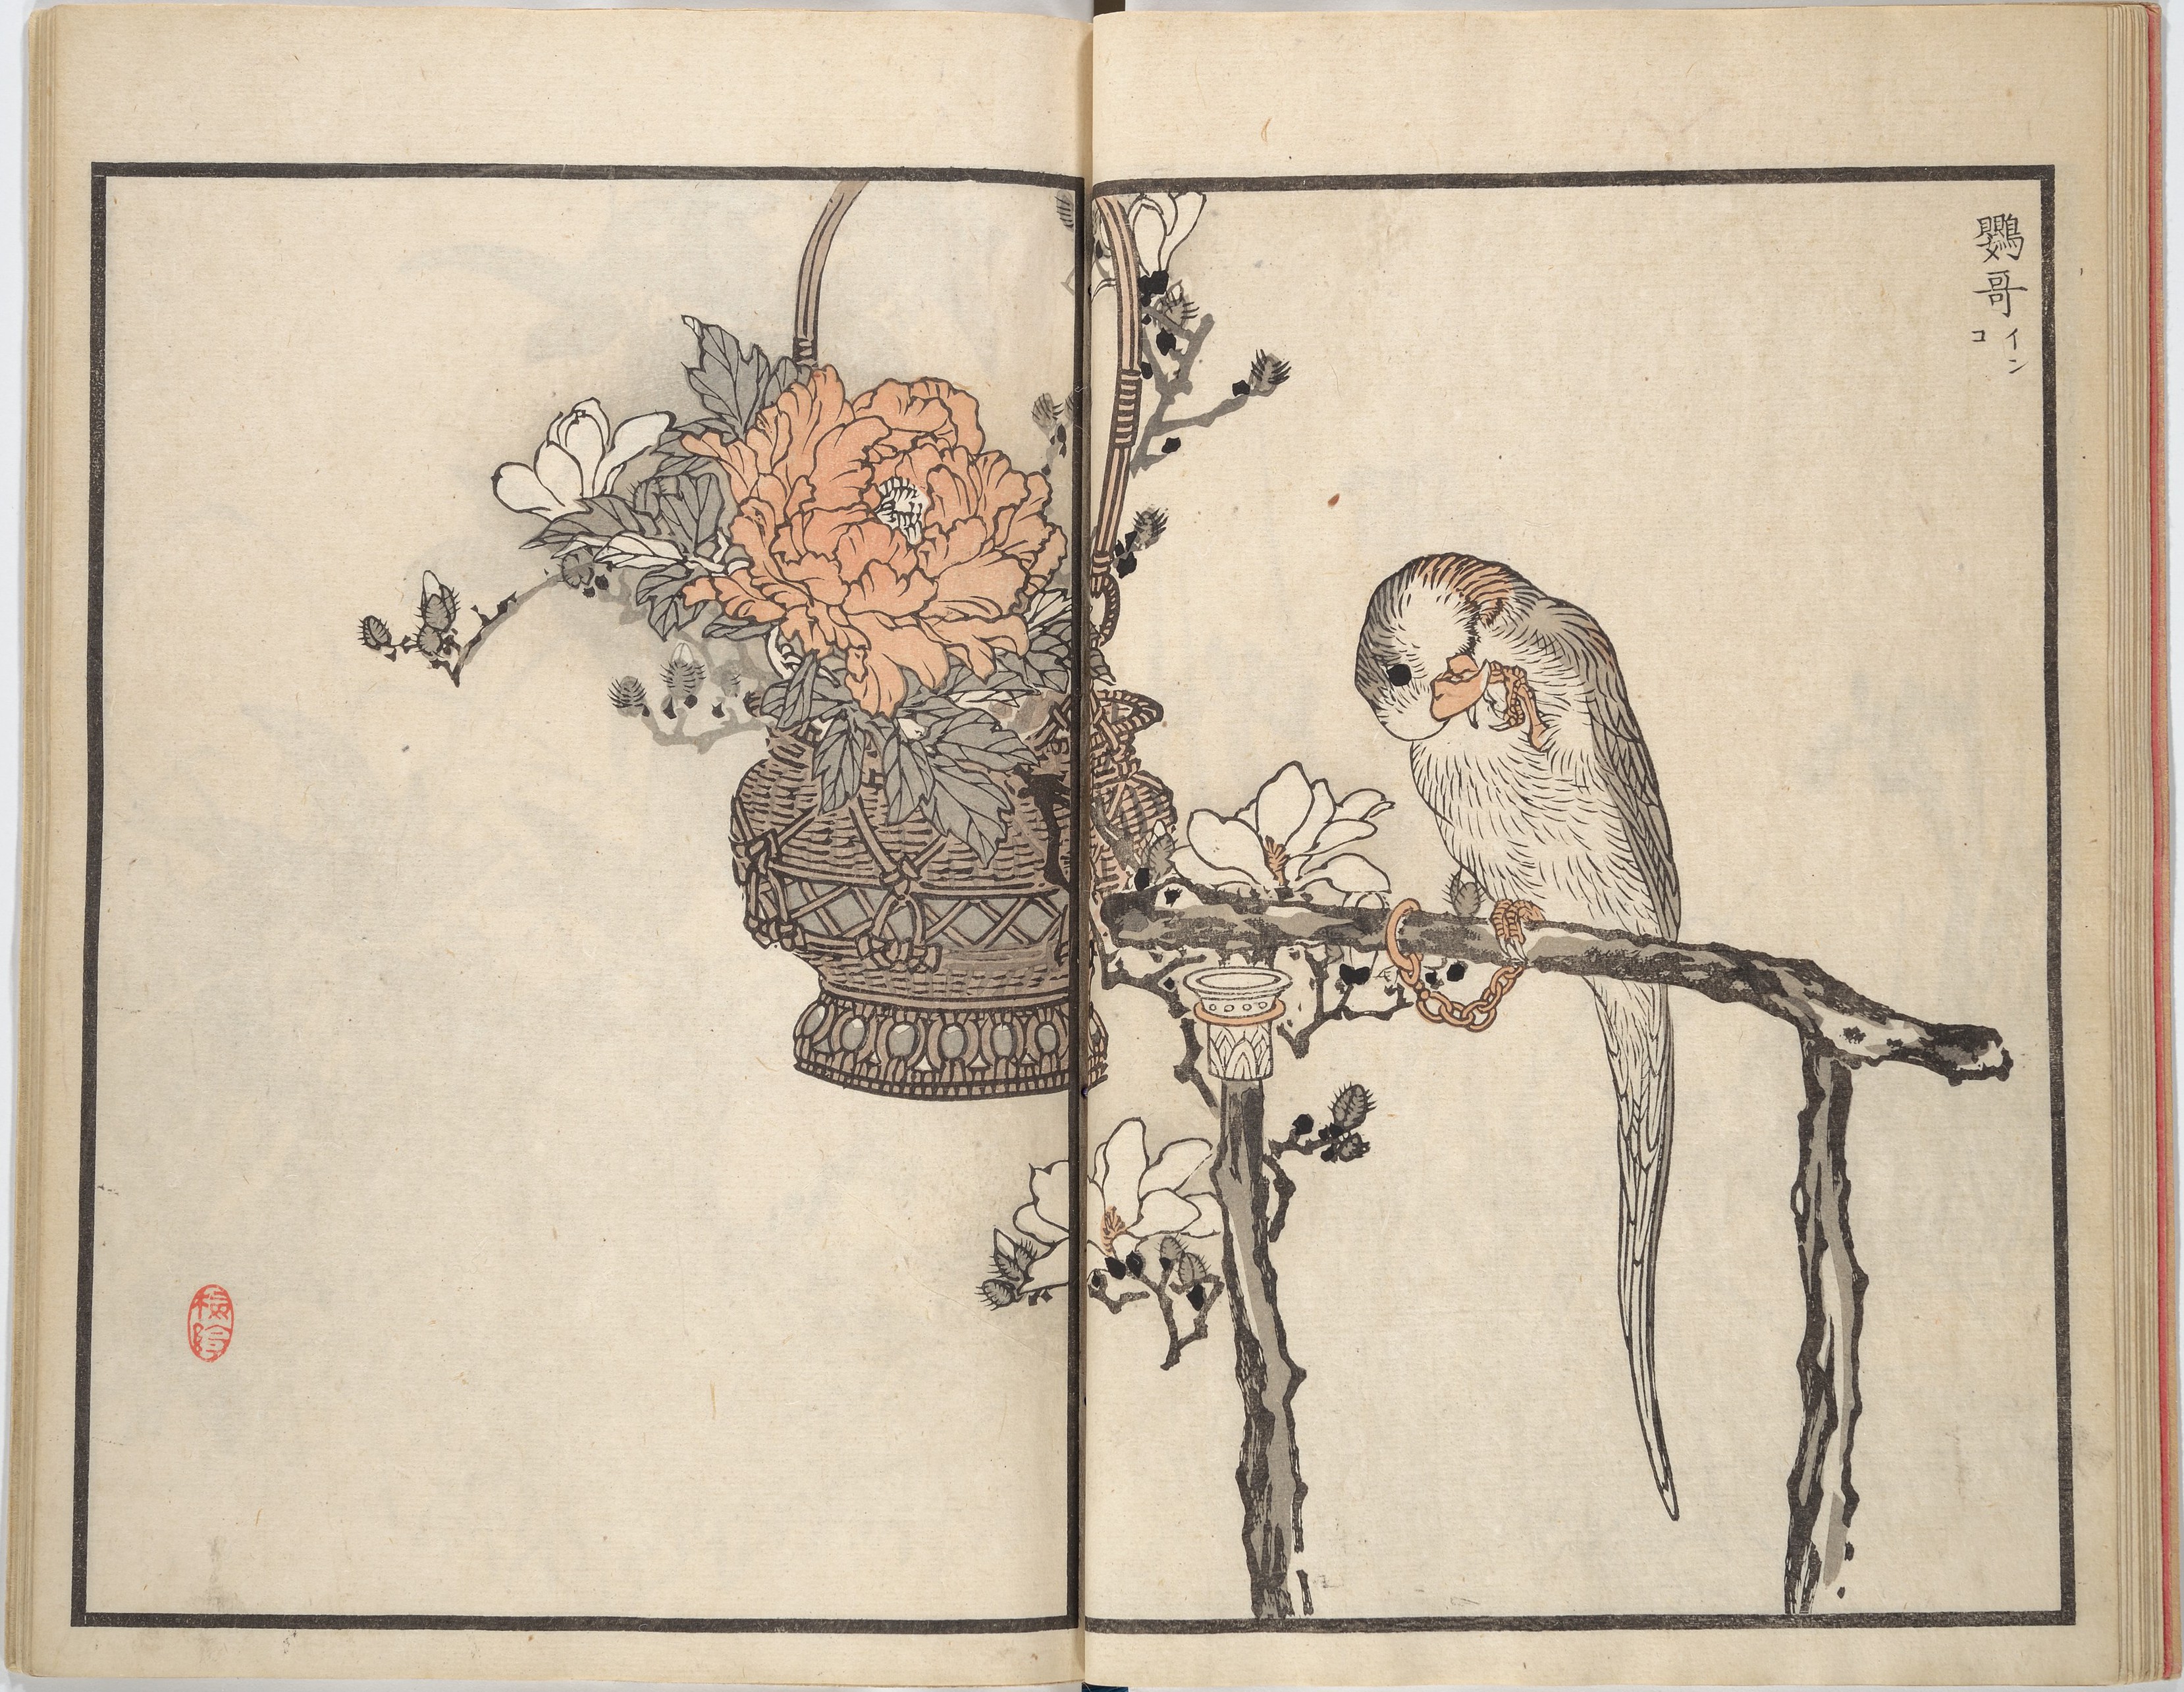 Kōno Bairei 幸野楳嶺   Bairei Picture Album of One Hundred Birds